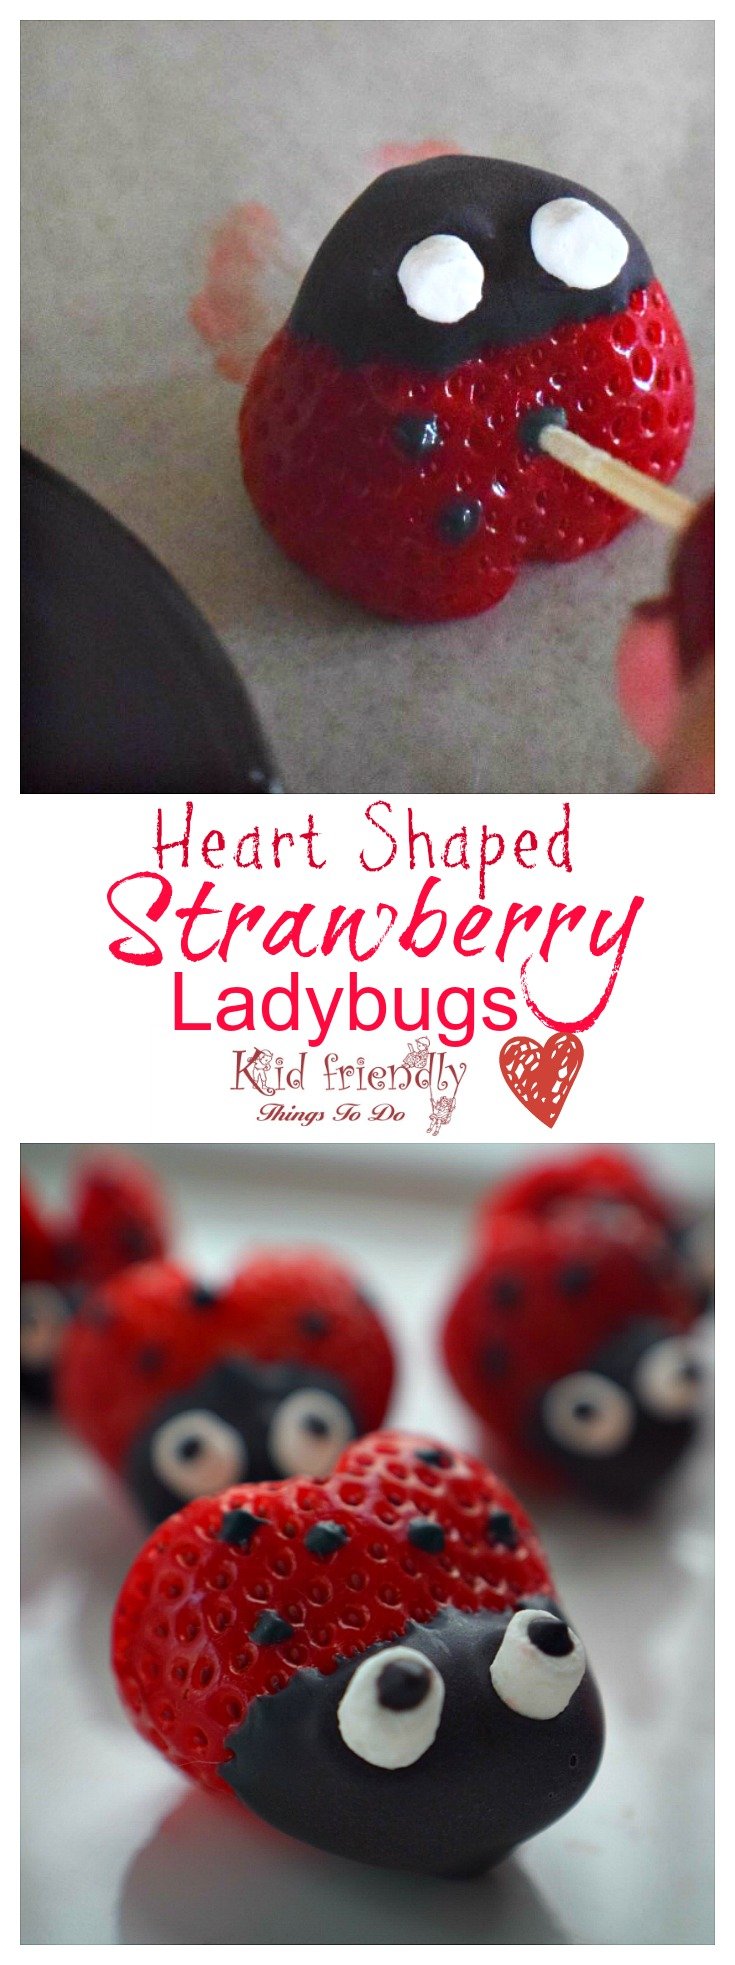 Heart shaped Chocolate Covered Strawberry Ladybugs